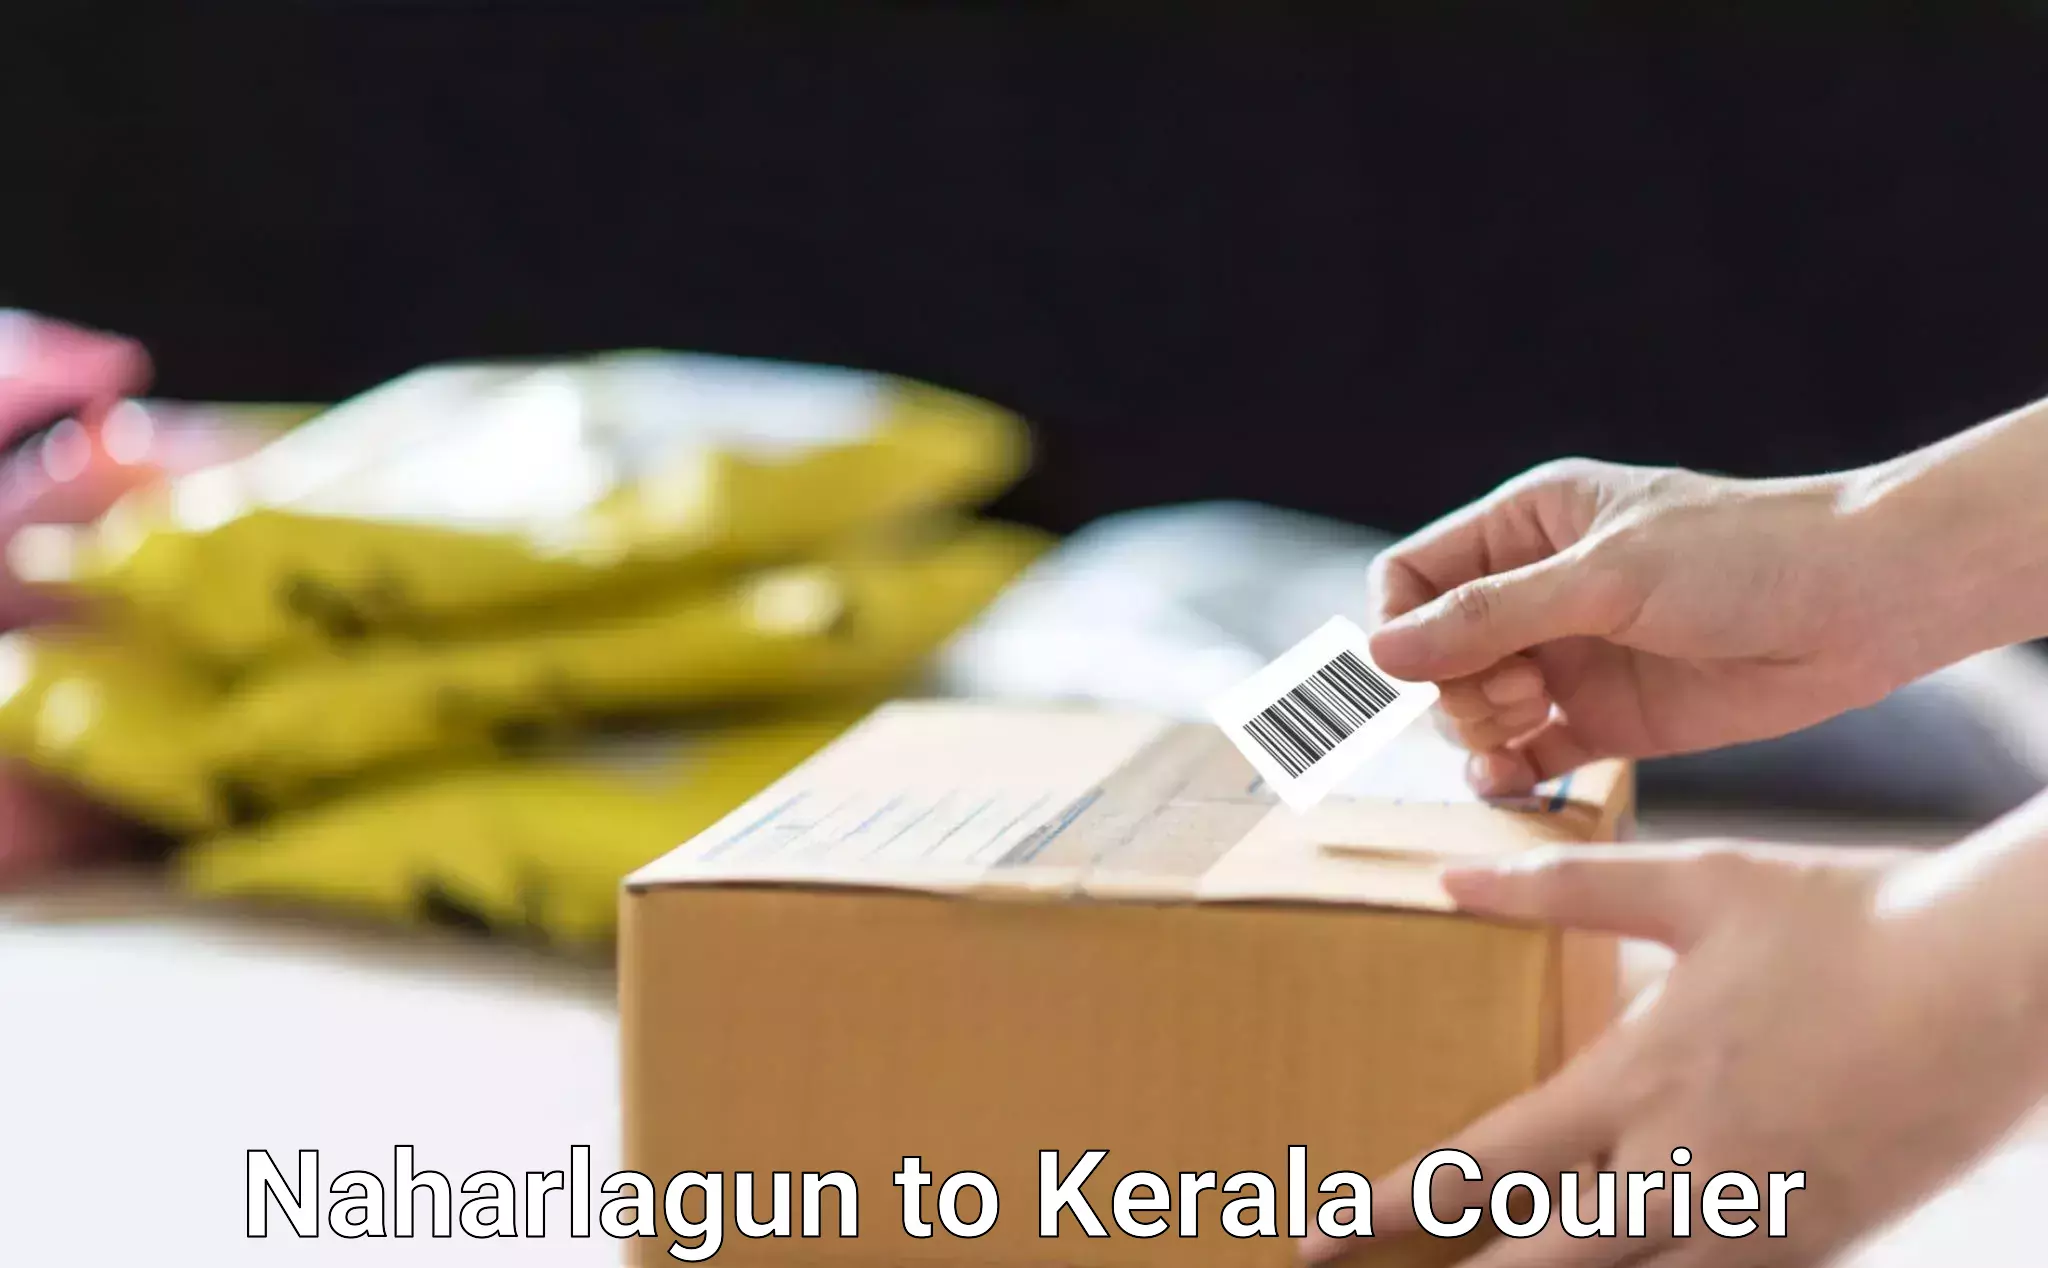 Customer-friendly courier services Naharlagun to Kochi